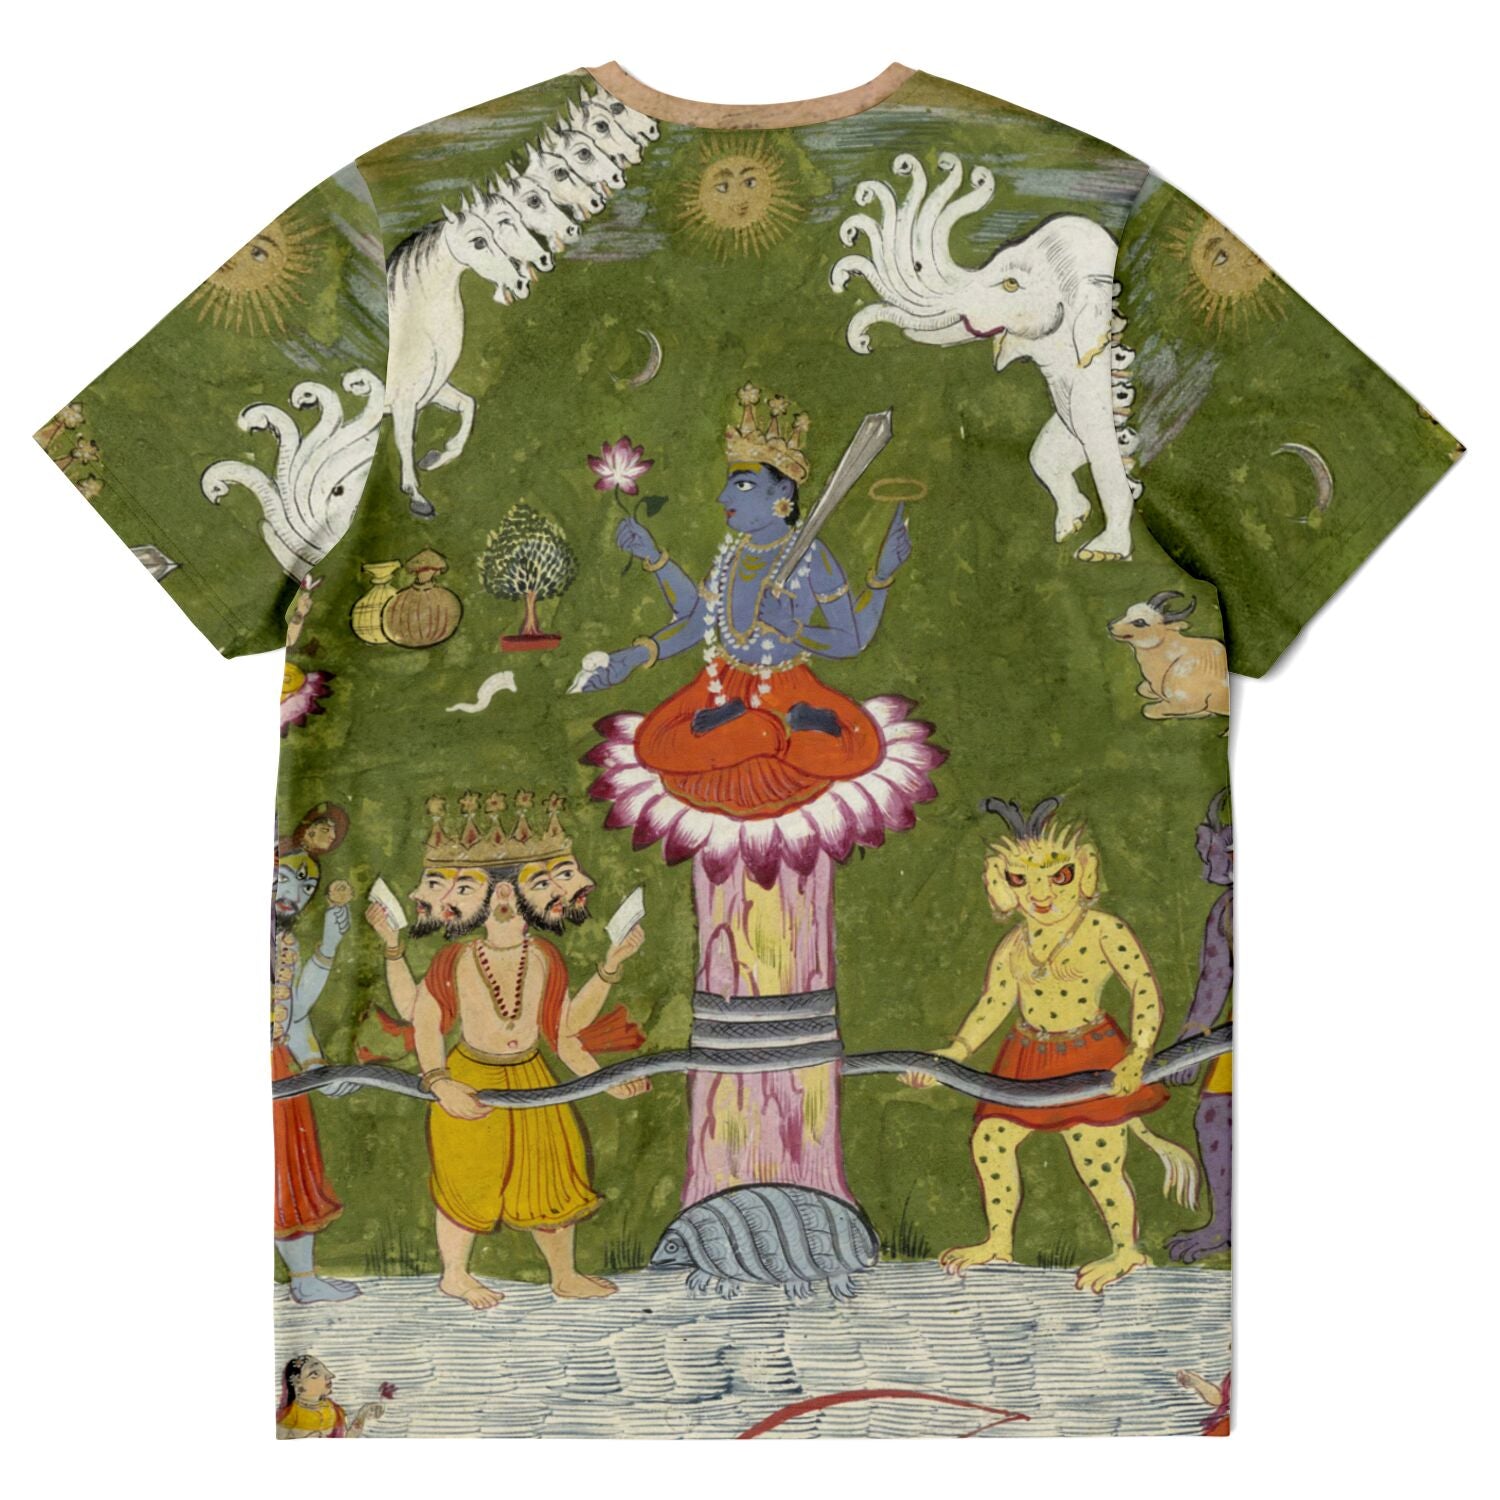 T-shirt Vishnu Consumes the Poison Halahala as His Tortoise Avatar Kurma and Saves the World | Sacred Vintage Indian Graphic Art T-Shirt